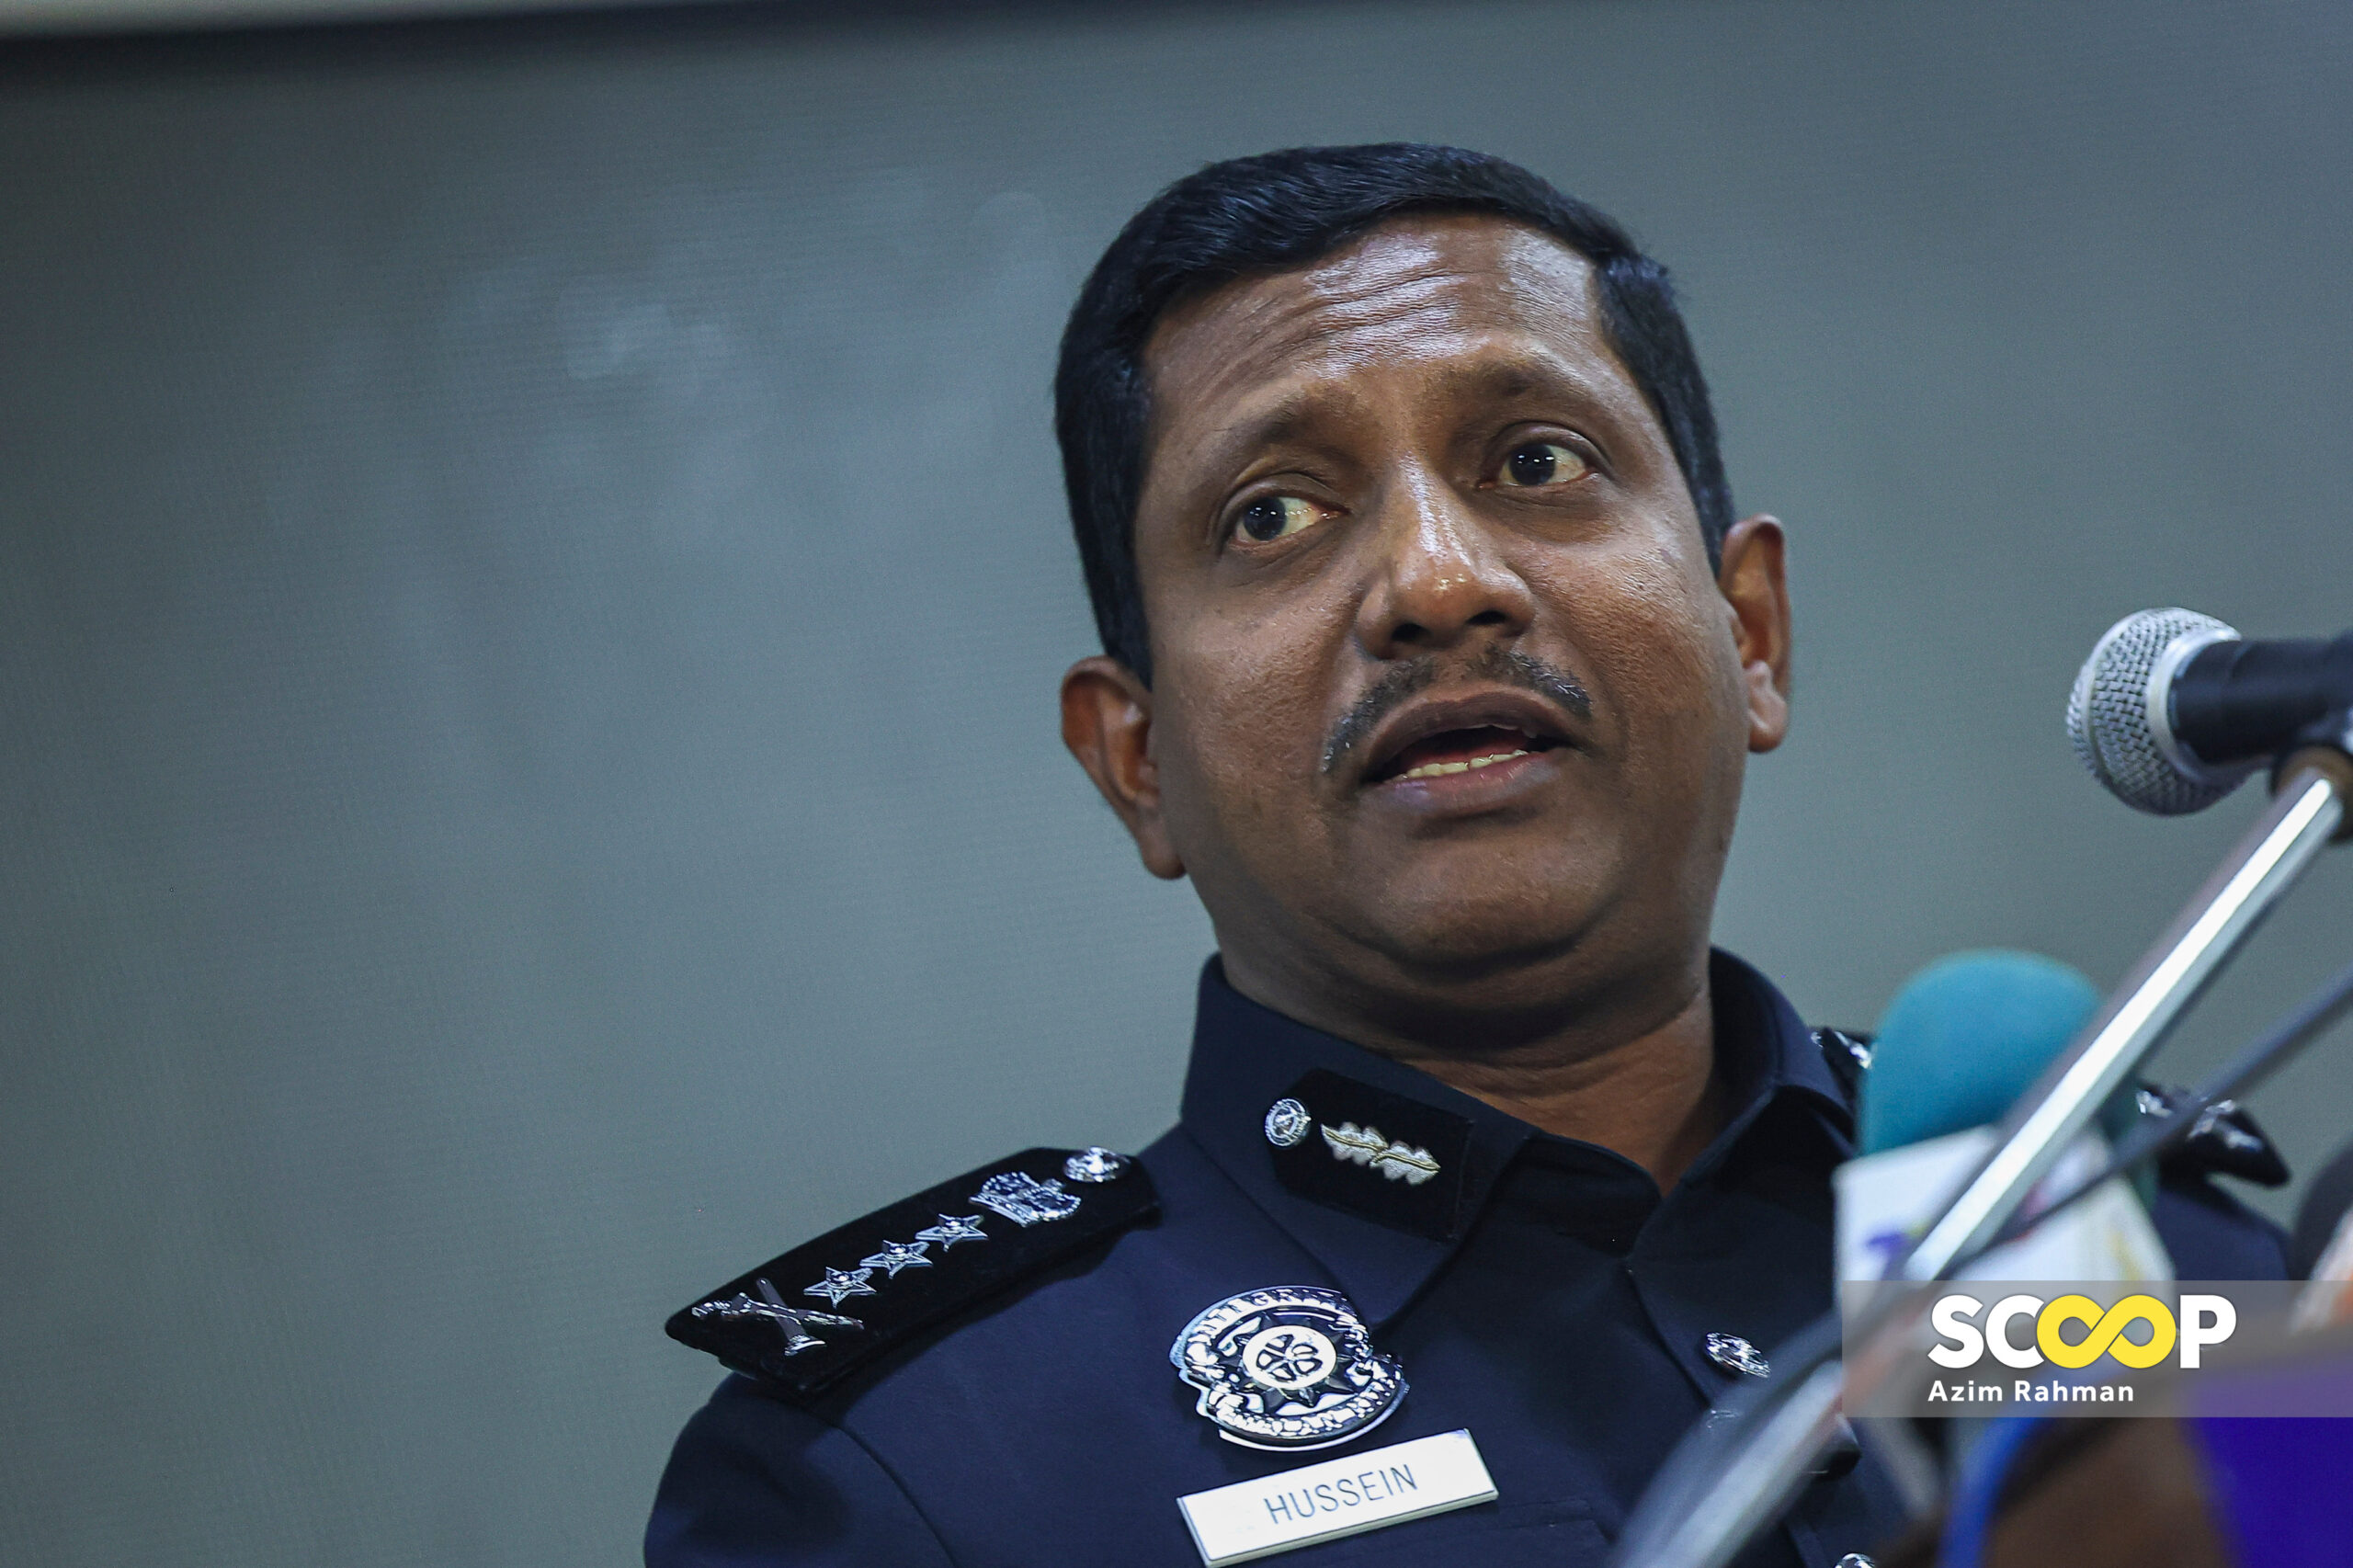 Polis ambil keterangan individu tinggalkan bagasi berisi wang tunai RM500,000